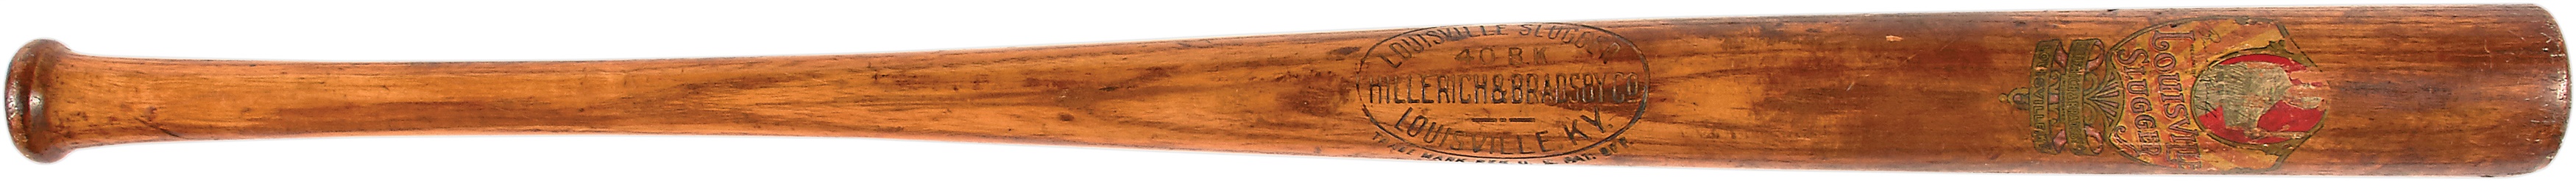 Antique Sporting Goods - 1910s Benny Kauff Decal Bat